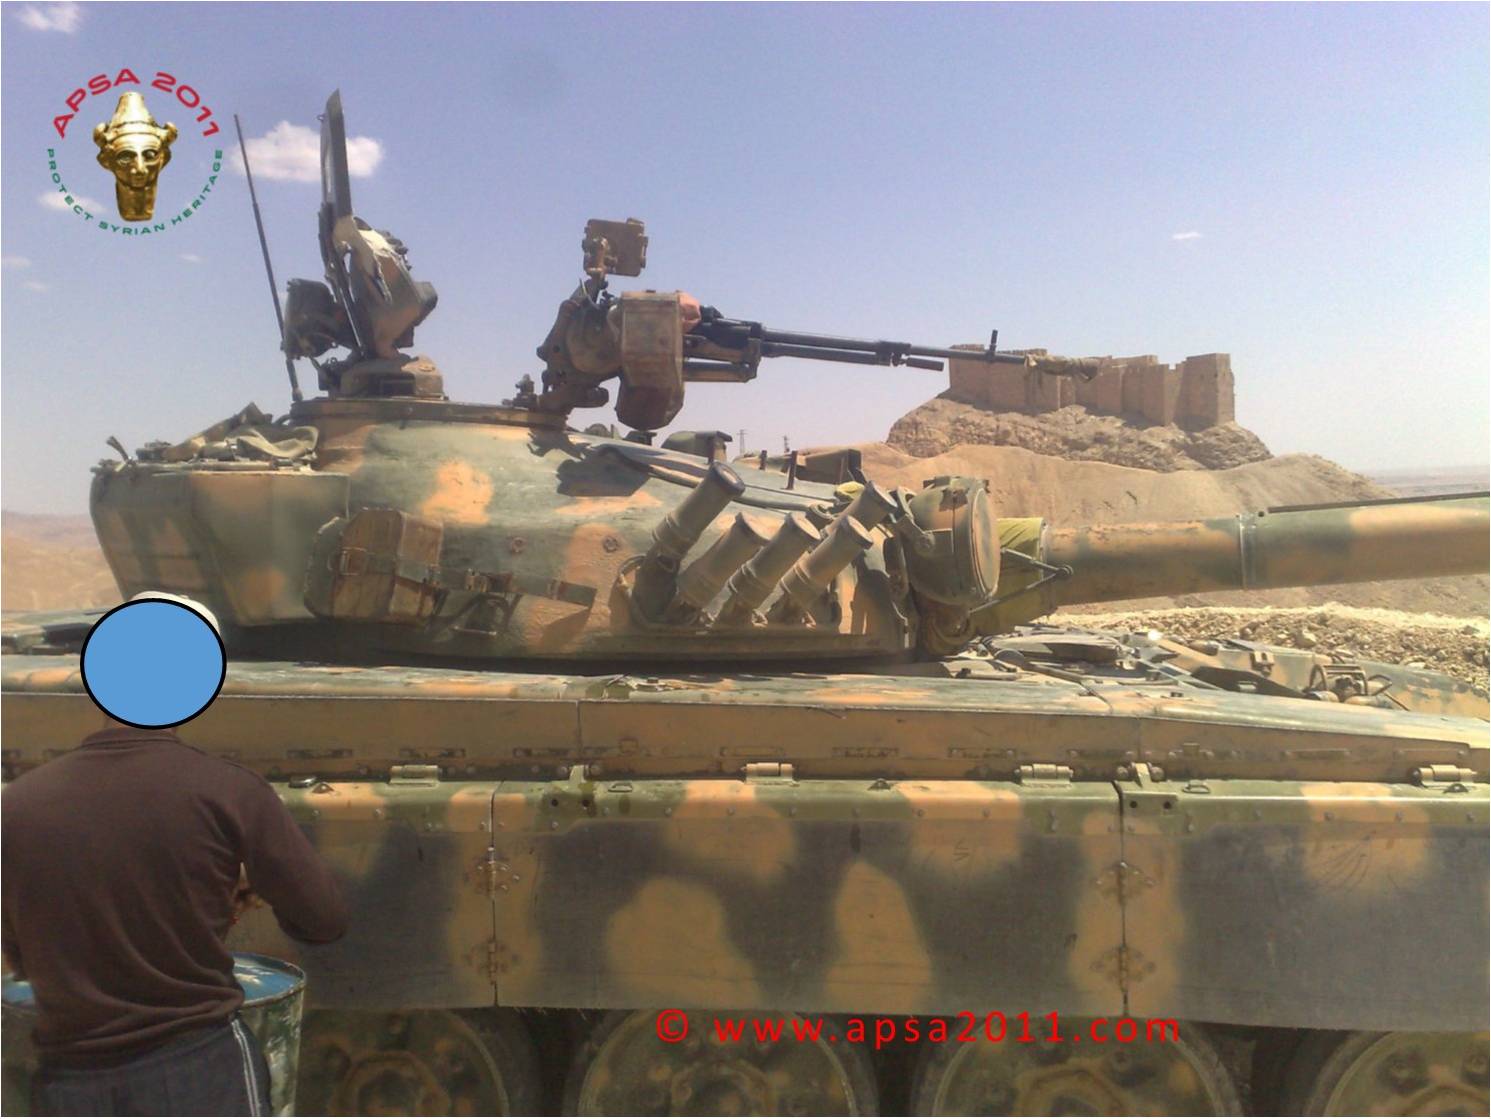 Syrian regime tank at Palmyra, photo courtesy of APSA.